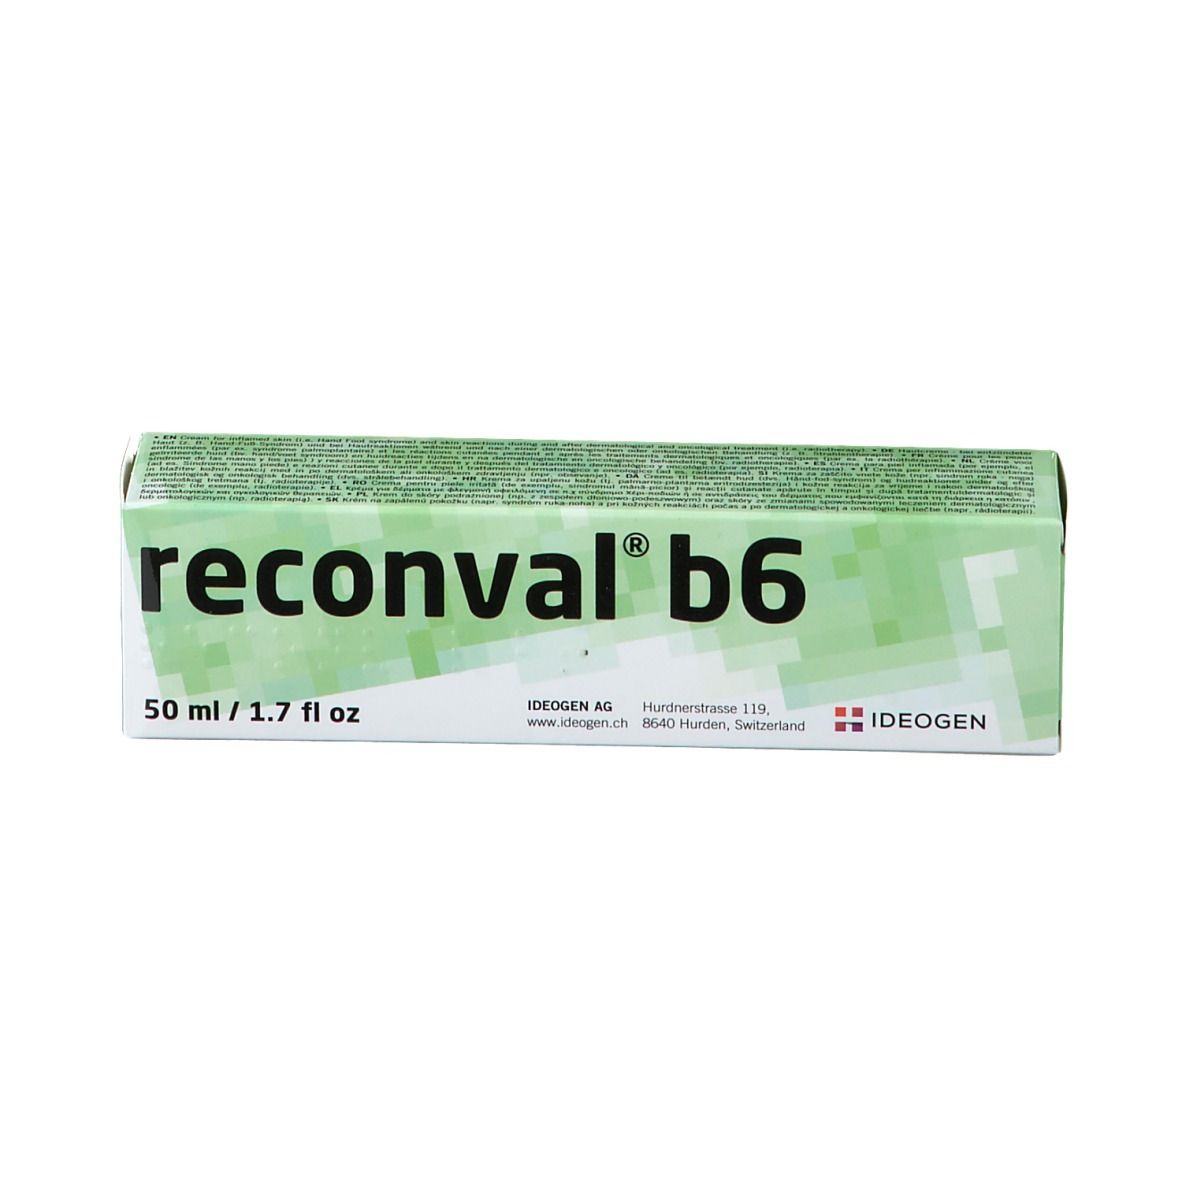 recvonal® B6 Creme